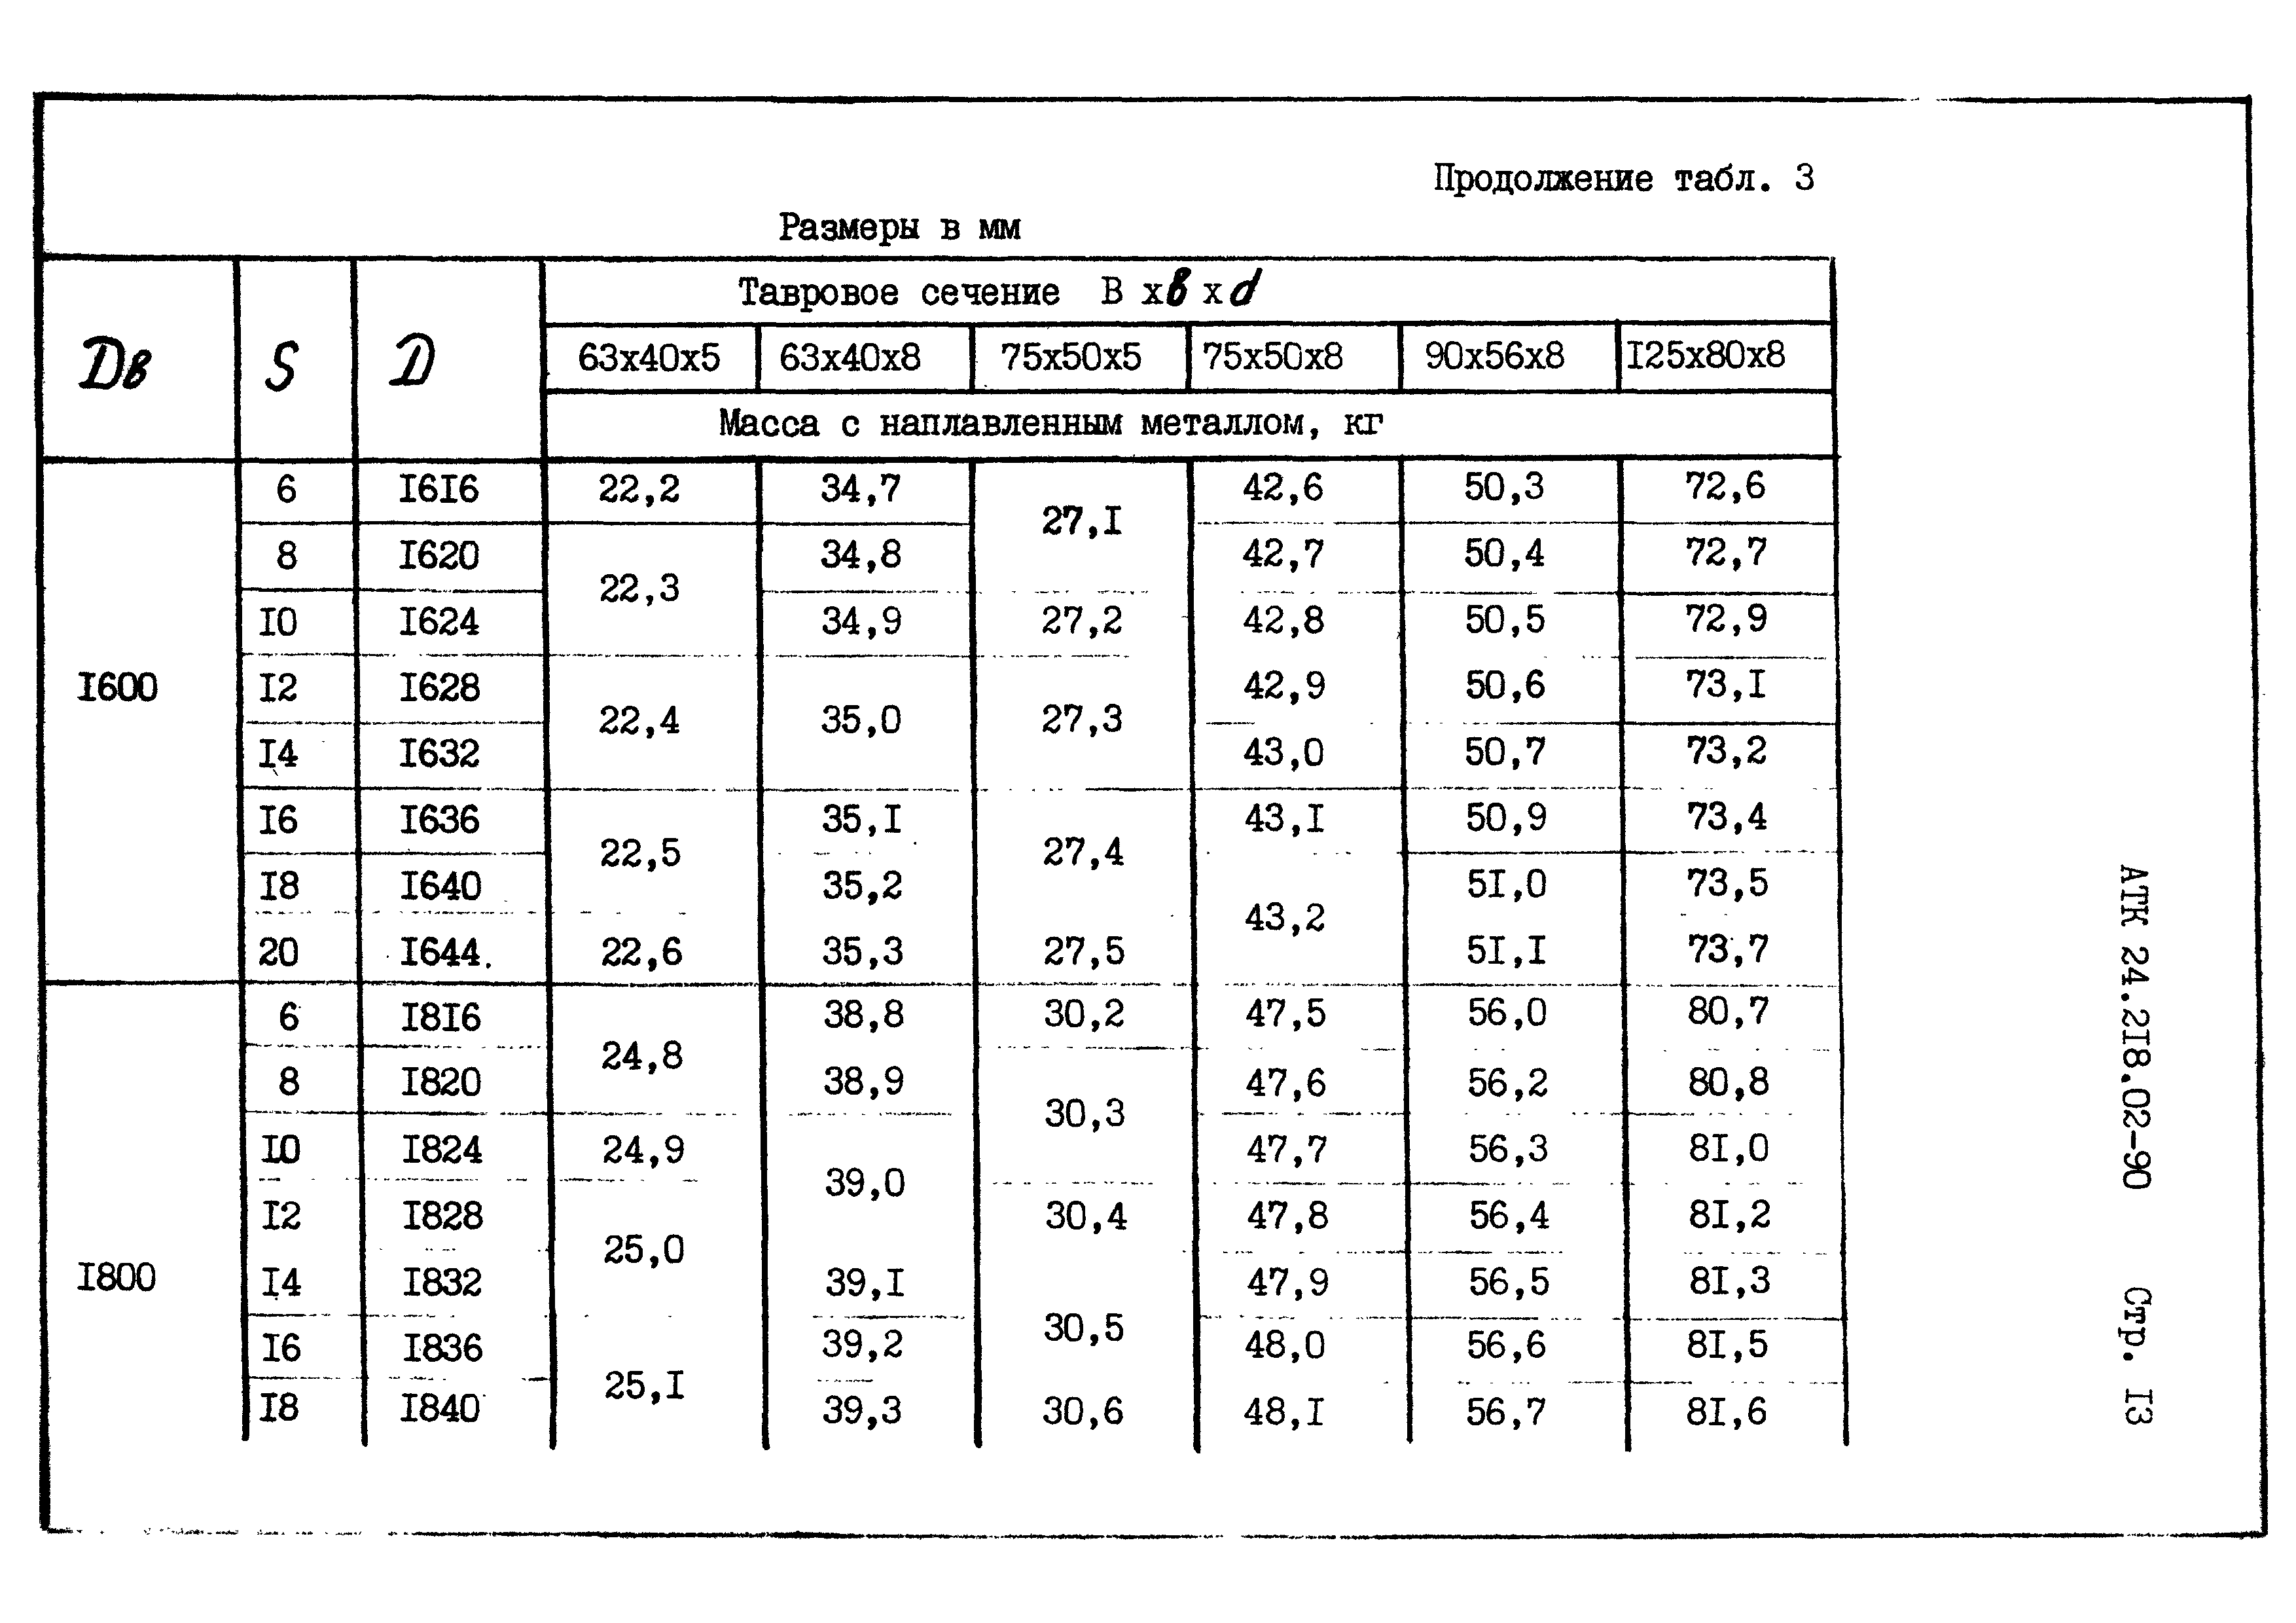 АТК 24.218.02-90